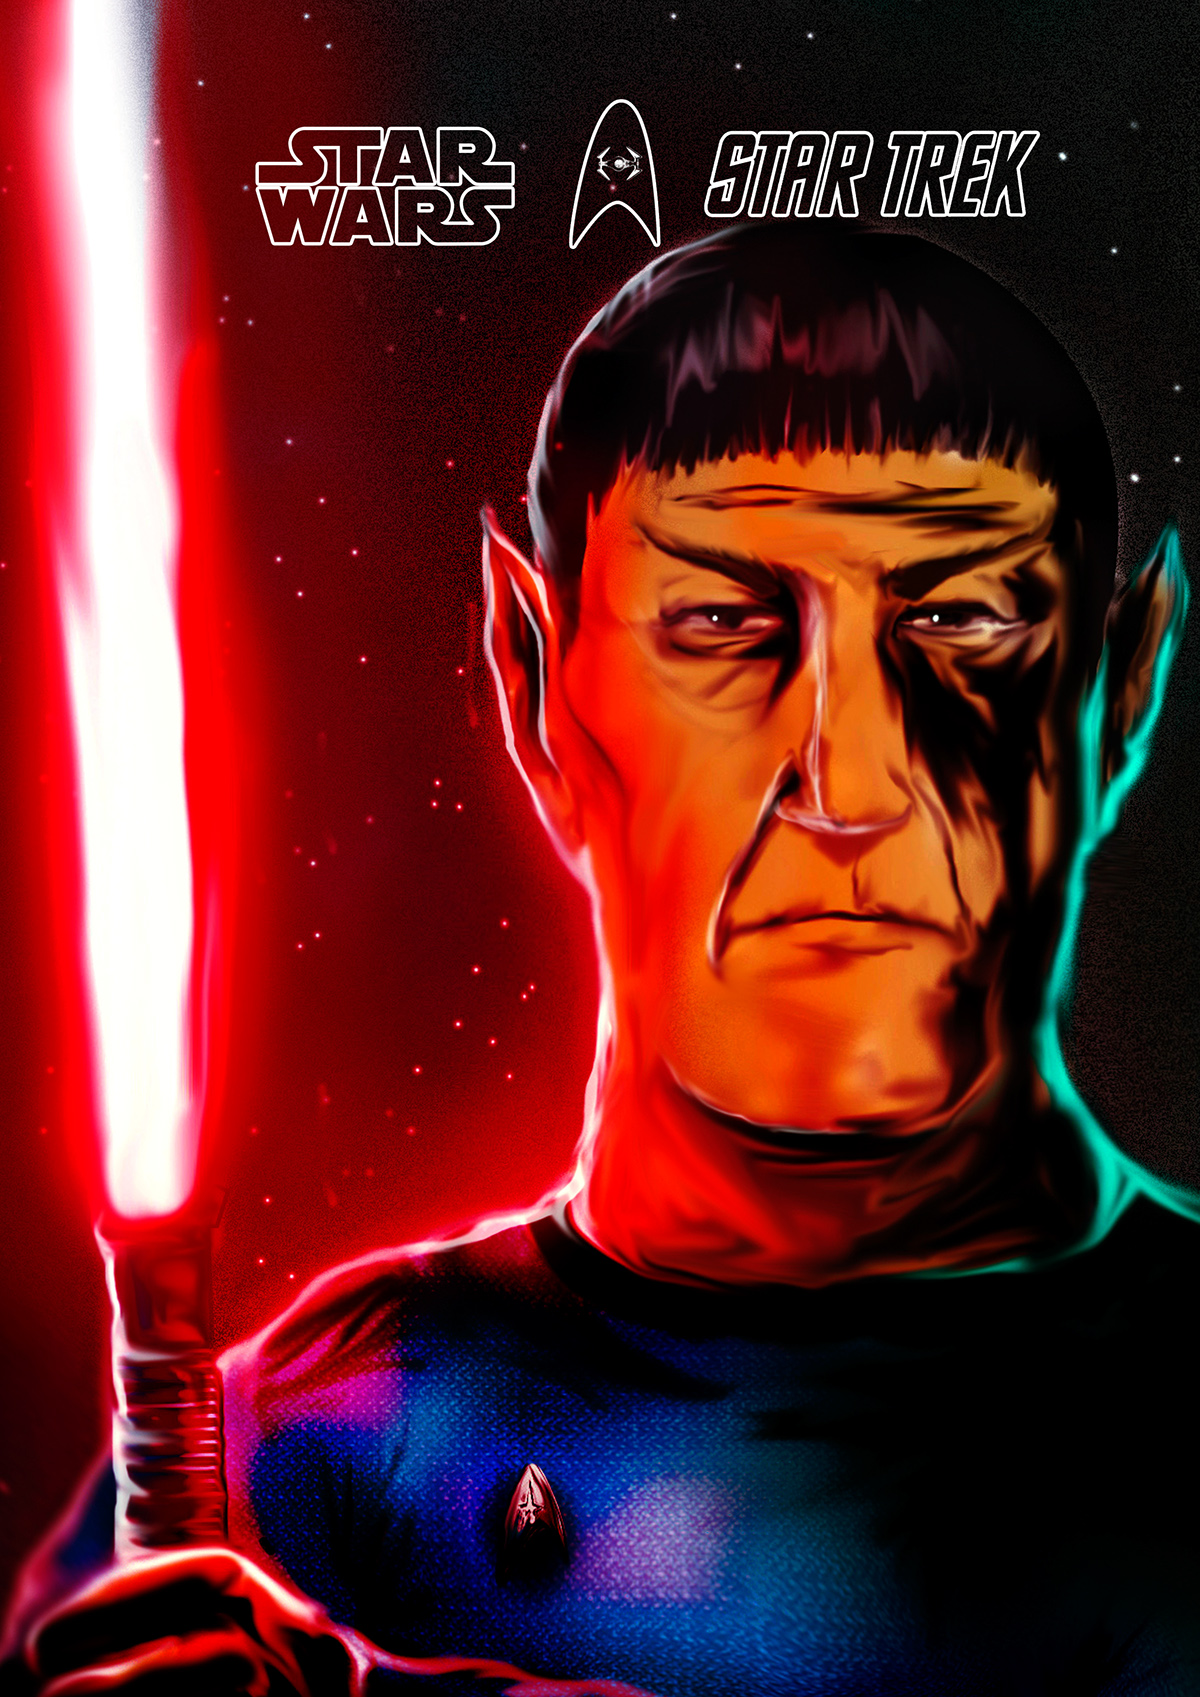 Adobe Portfolio star wars Star Trek spock crossover